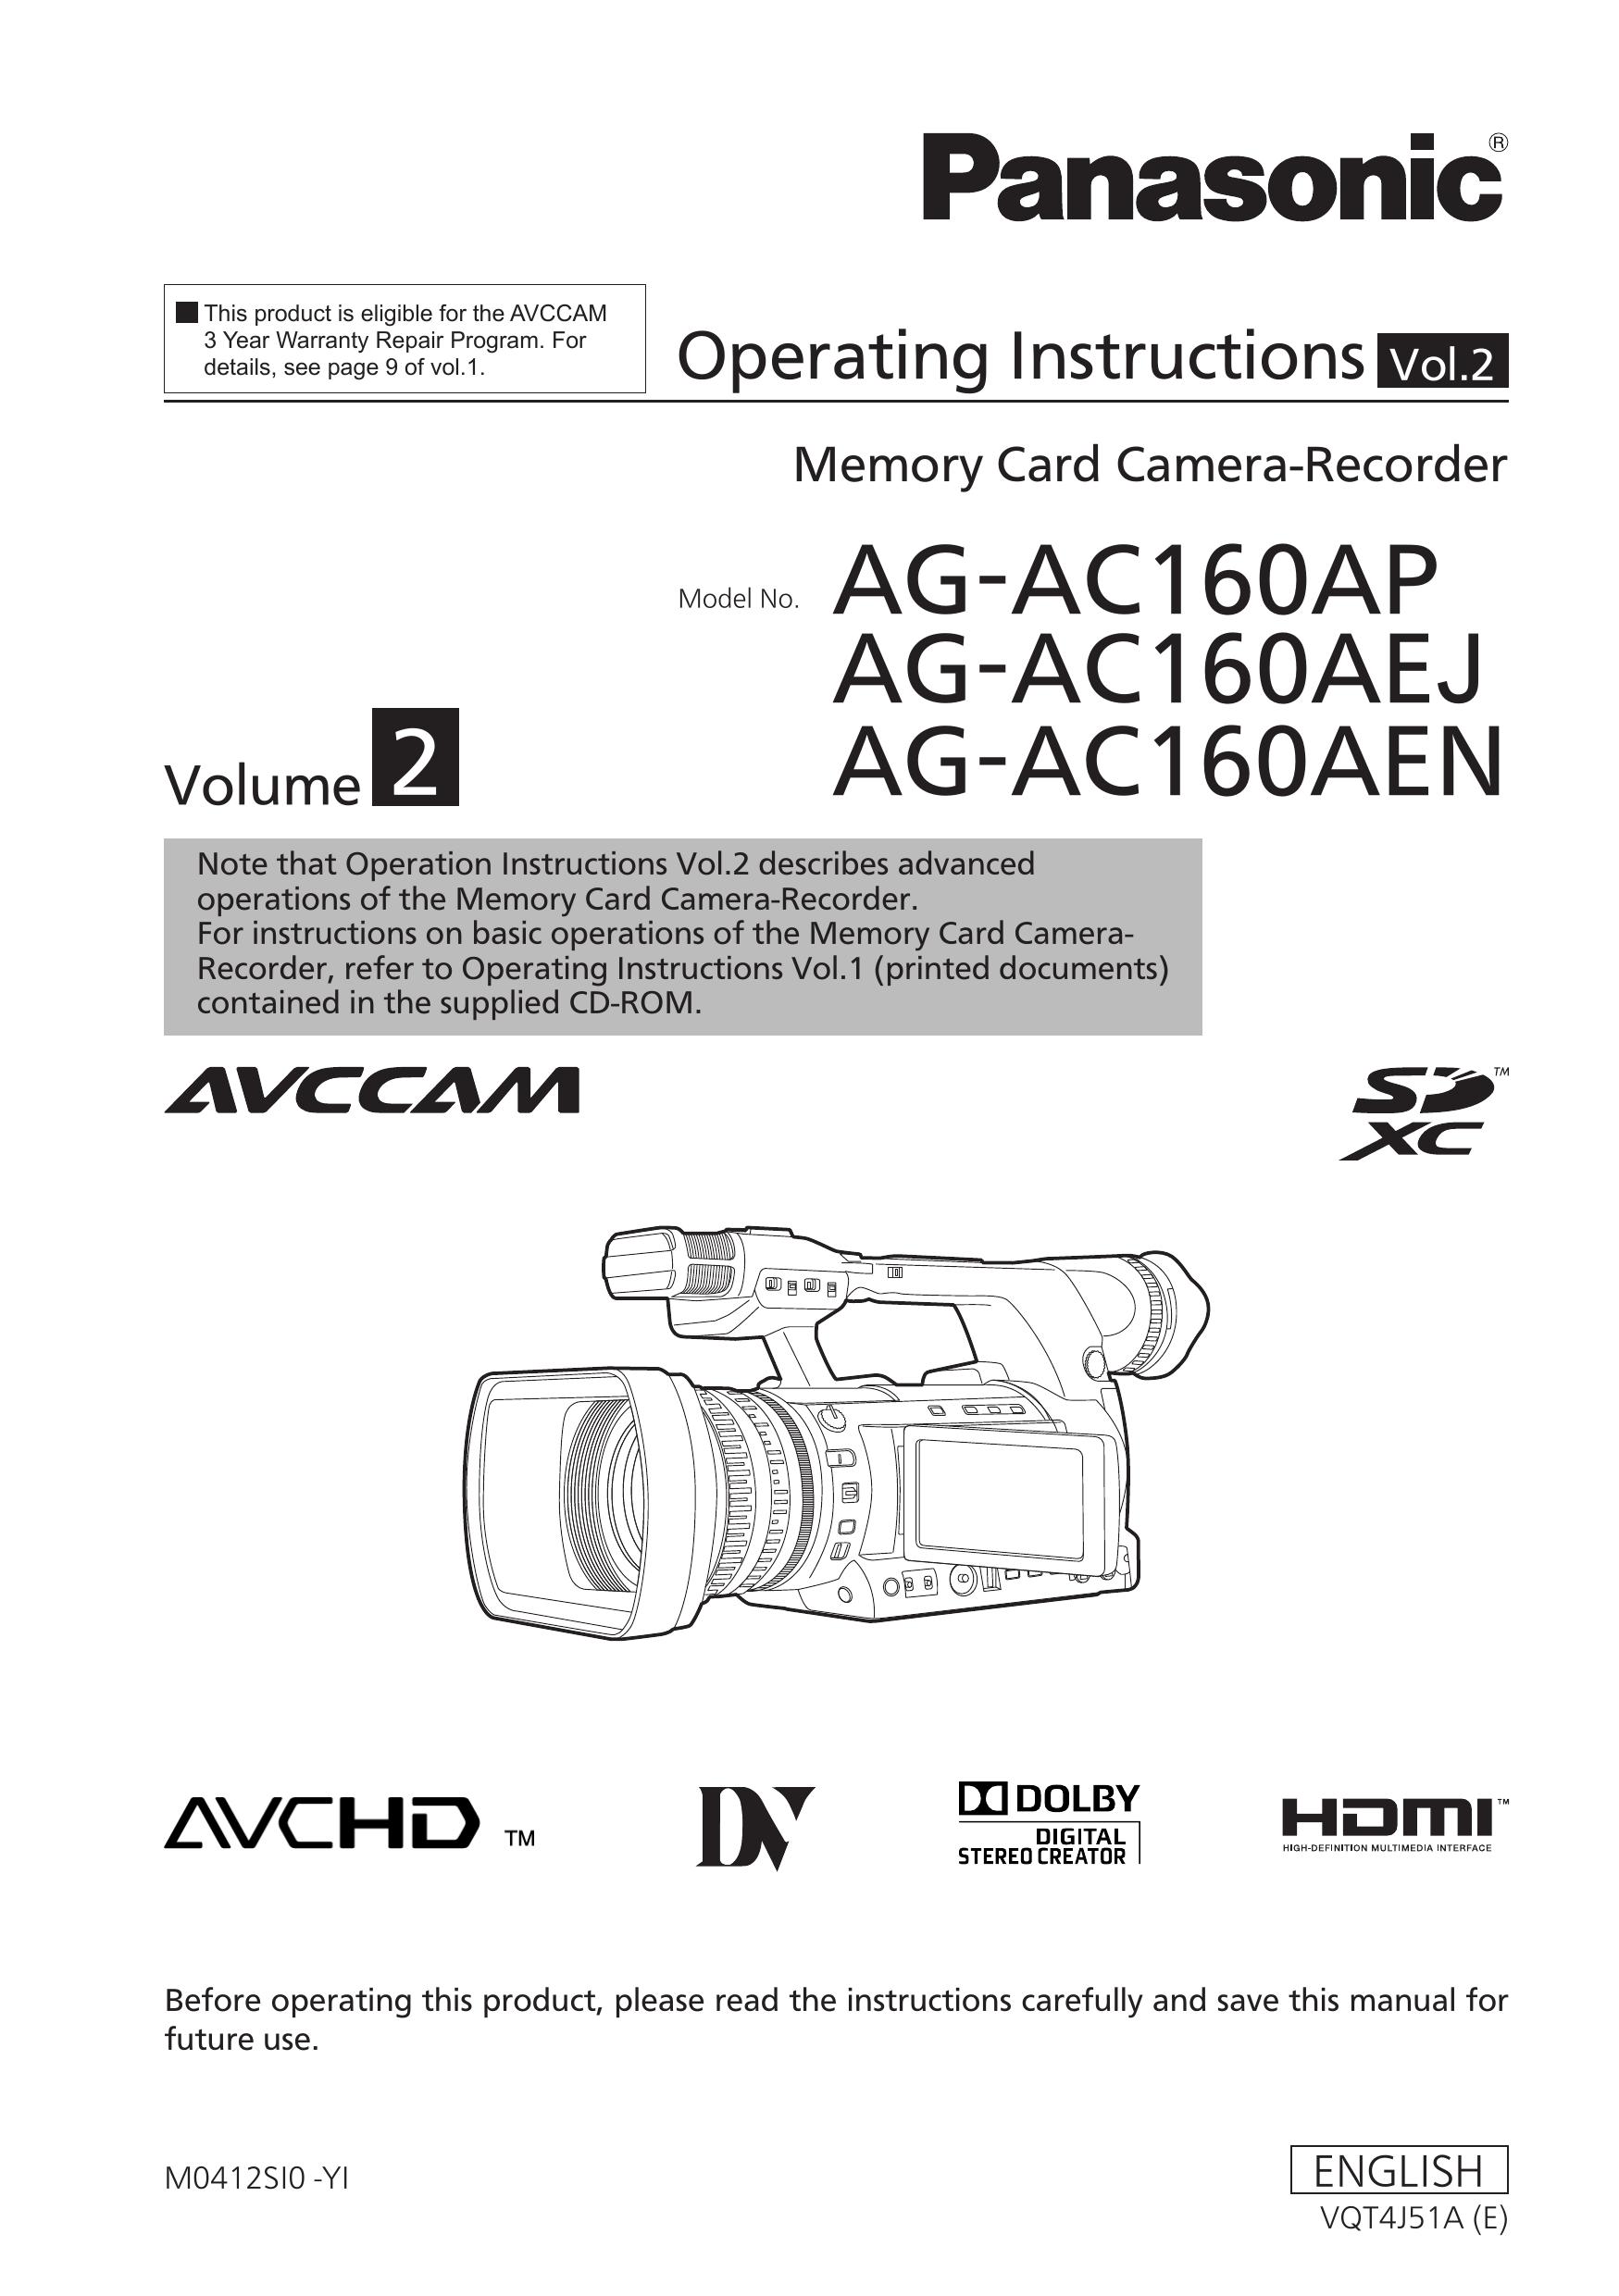 Panasonic AG-AC160AEN Camcorder User Manual